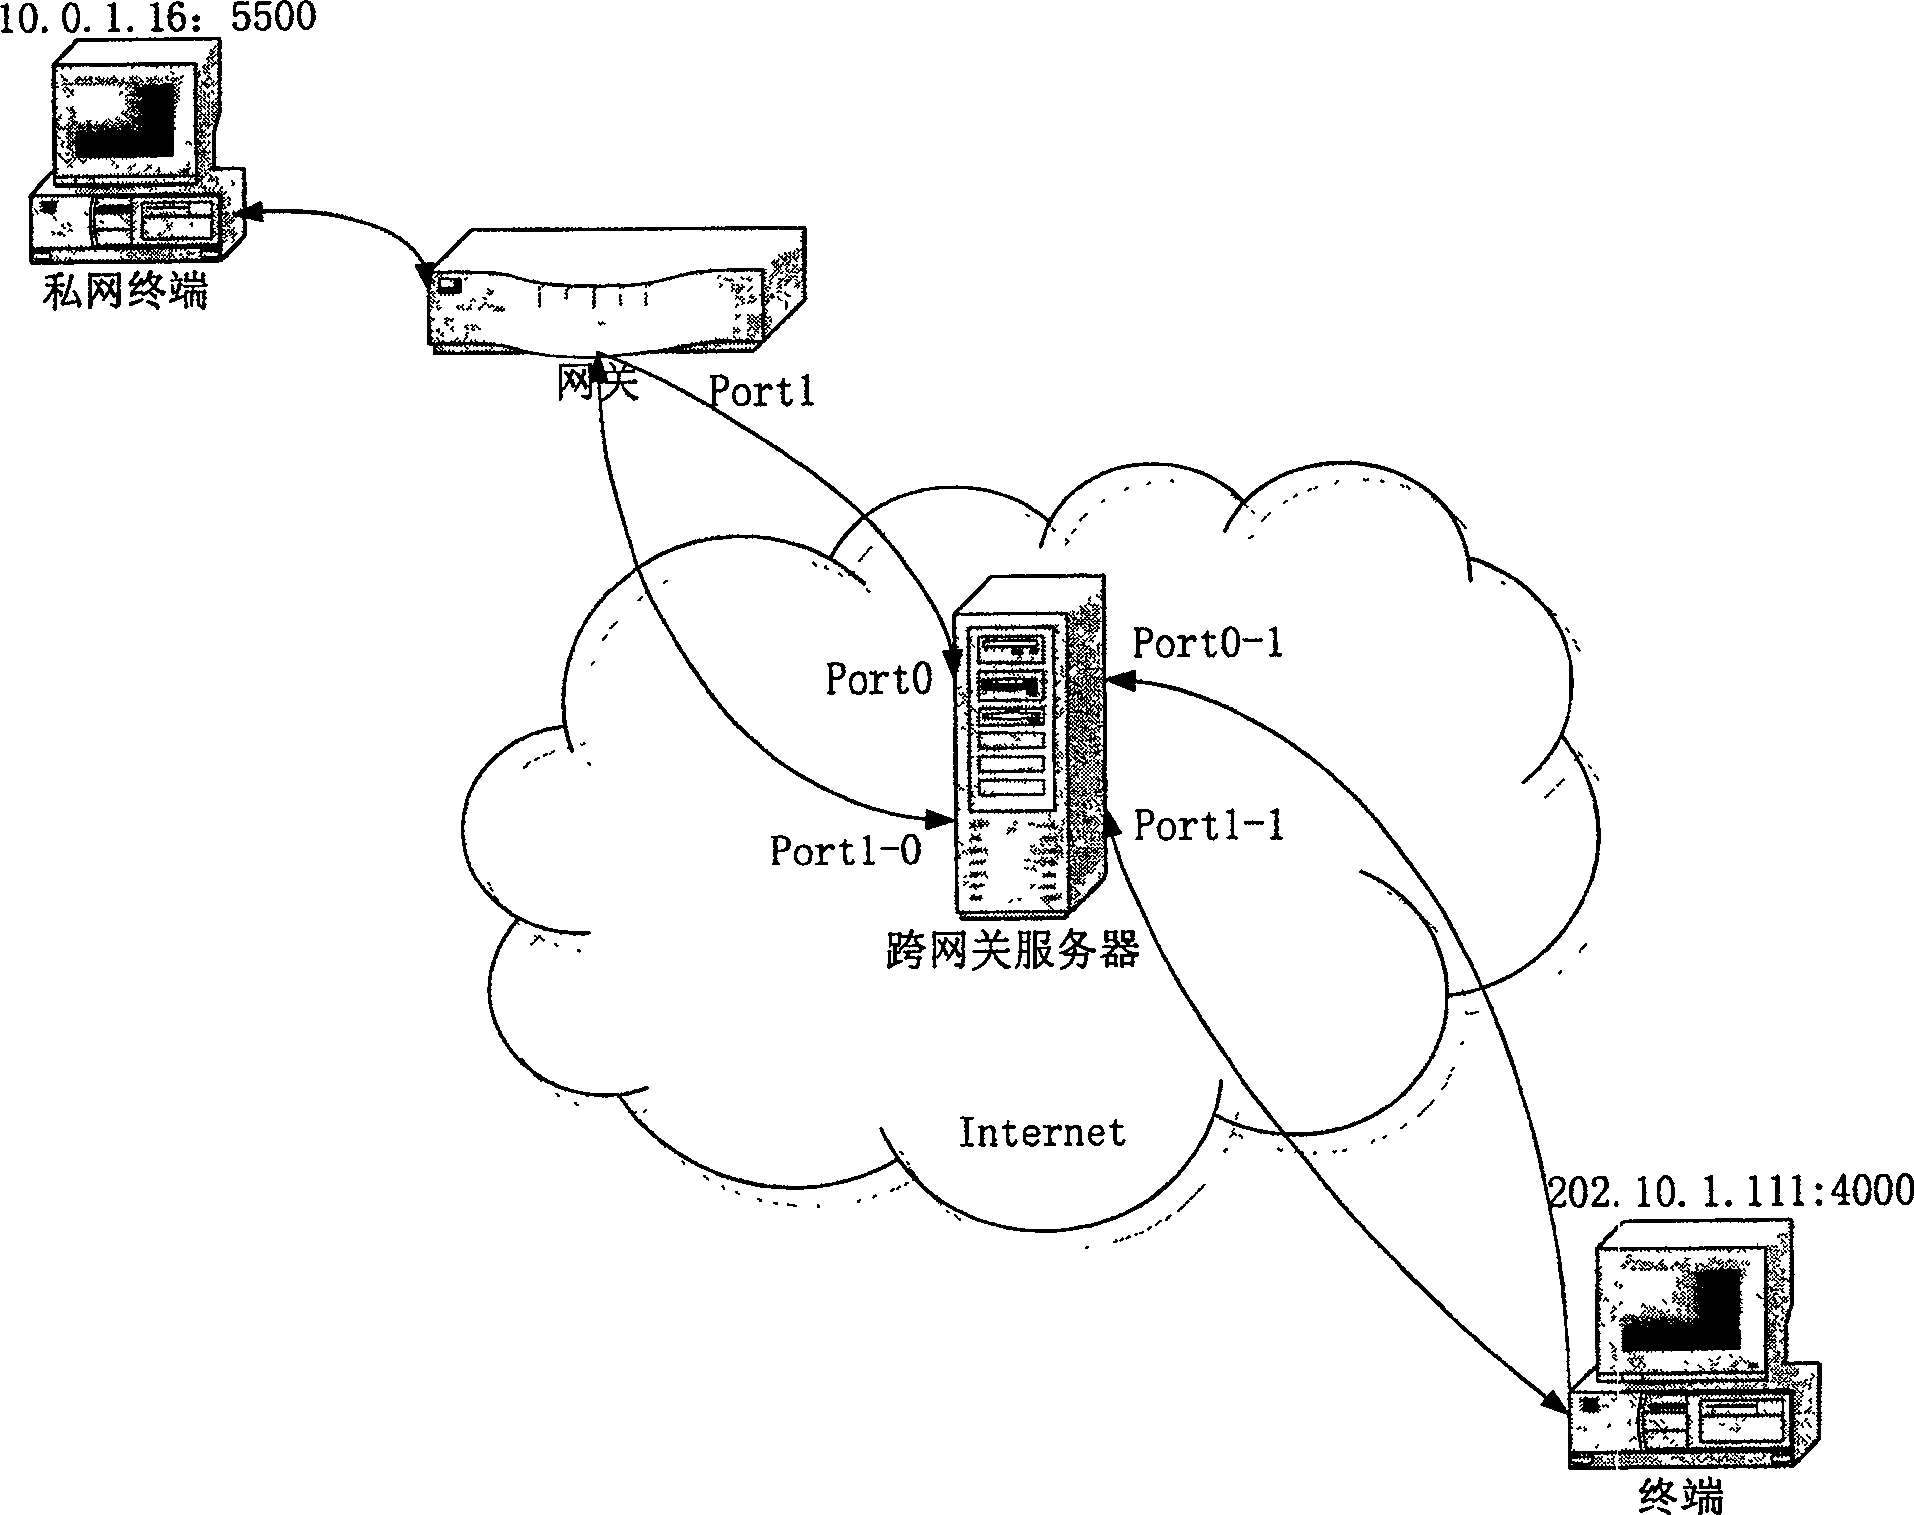 Communication method for spanning gateway